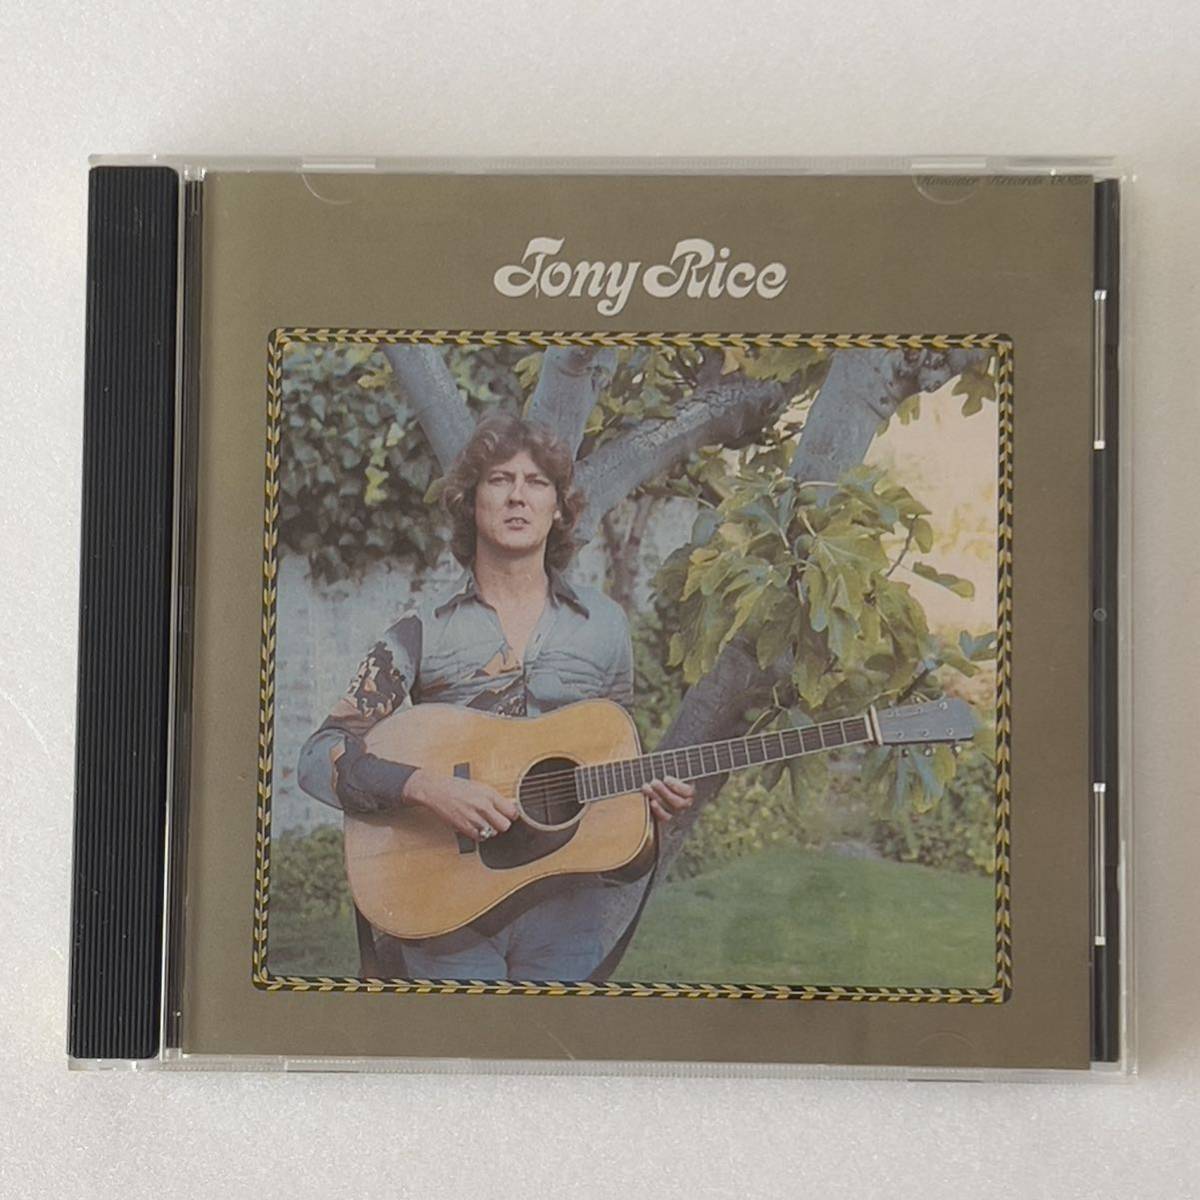 [CD][ зарубежная запись ]TONY RICE ROUNDFRCD0085